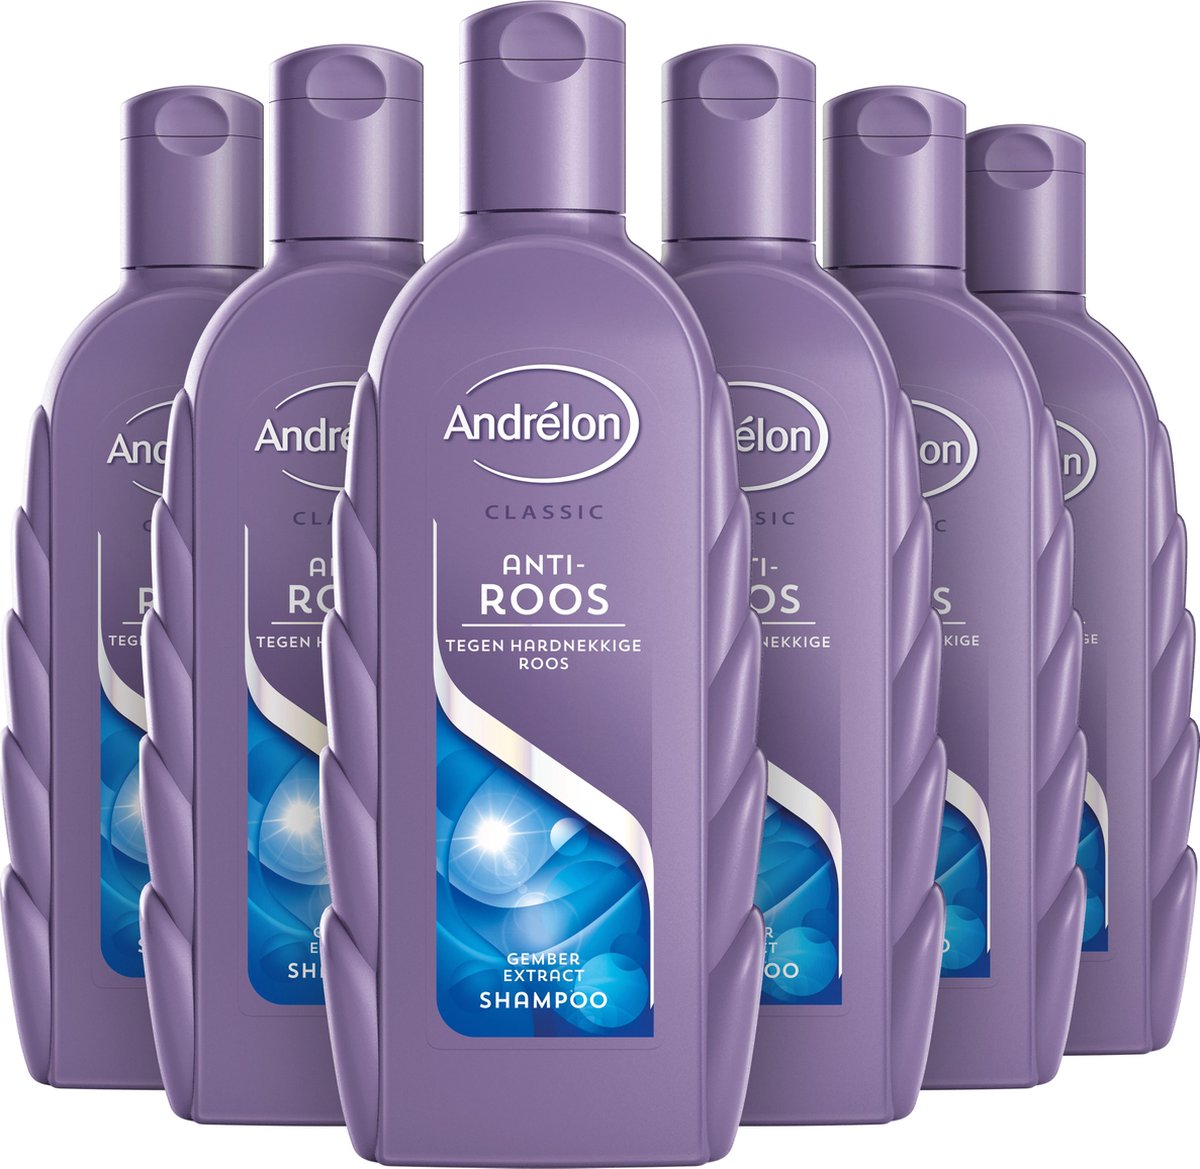 Andrélon Anti-Roos Shampoo x 300 ml -Voordeelverpakking | bol.com